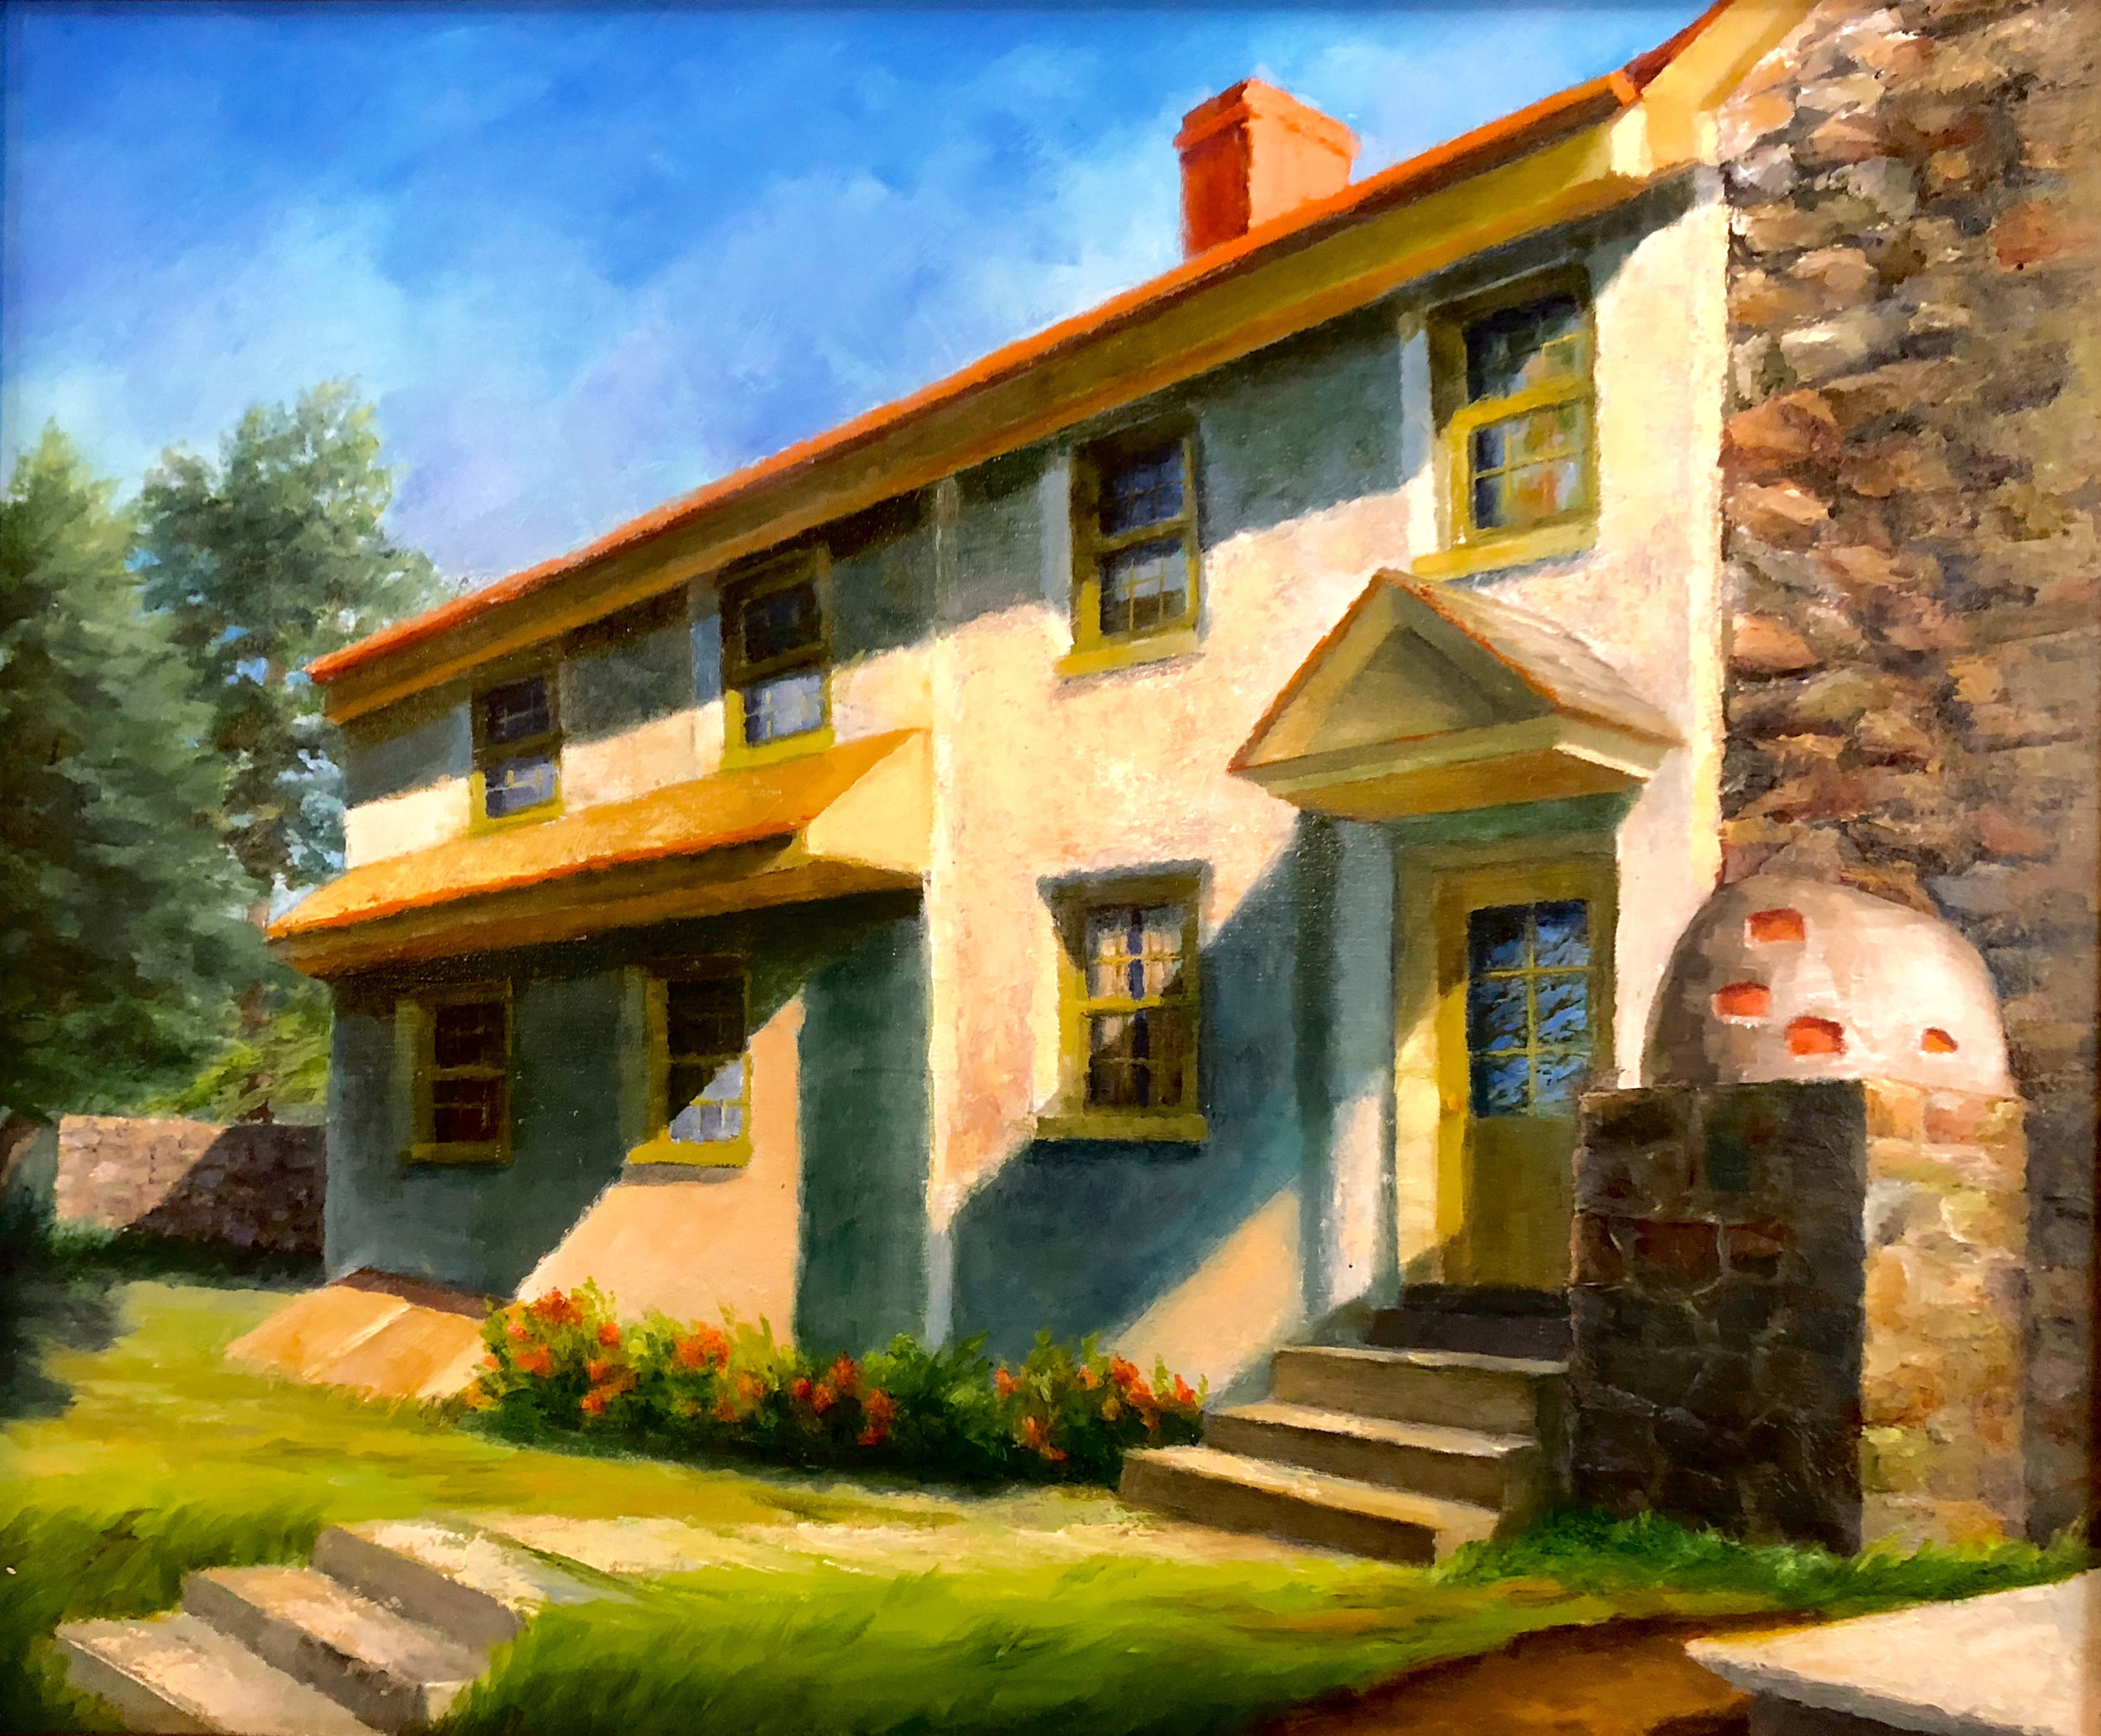 The Miller's House (Newlin Grist Mill)